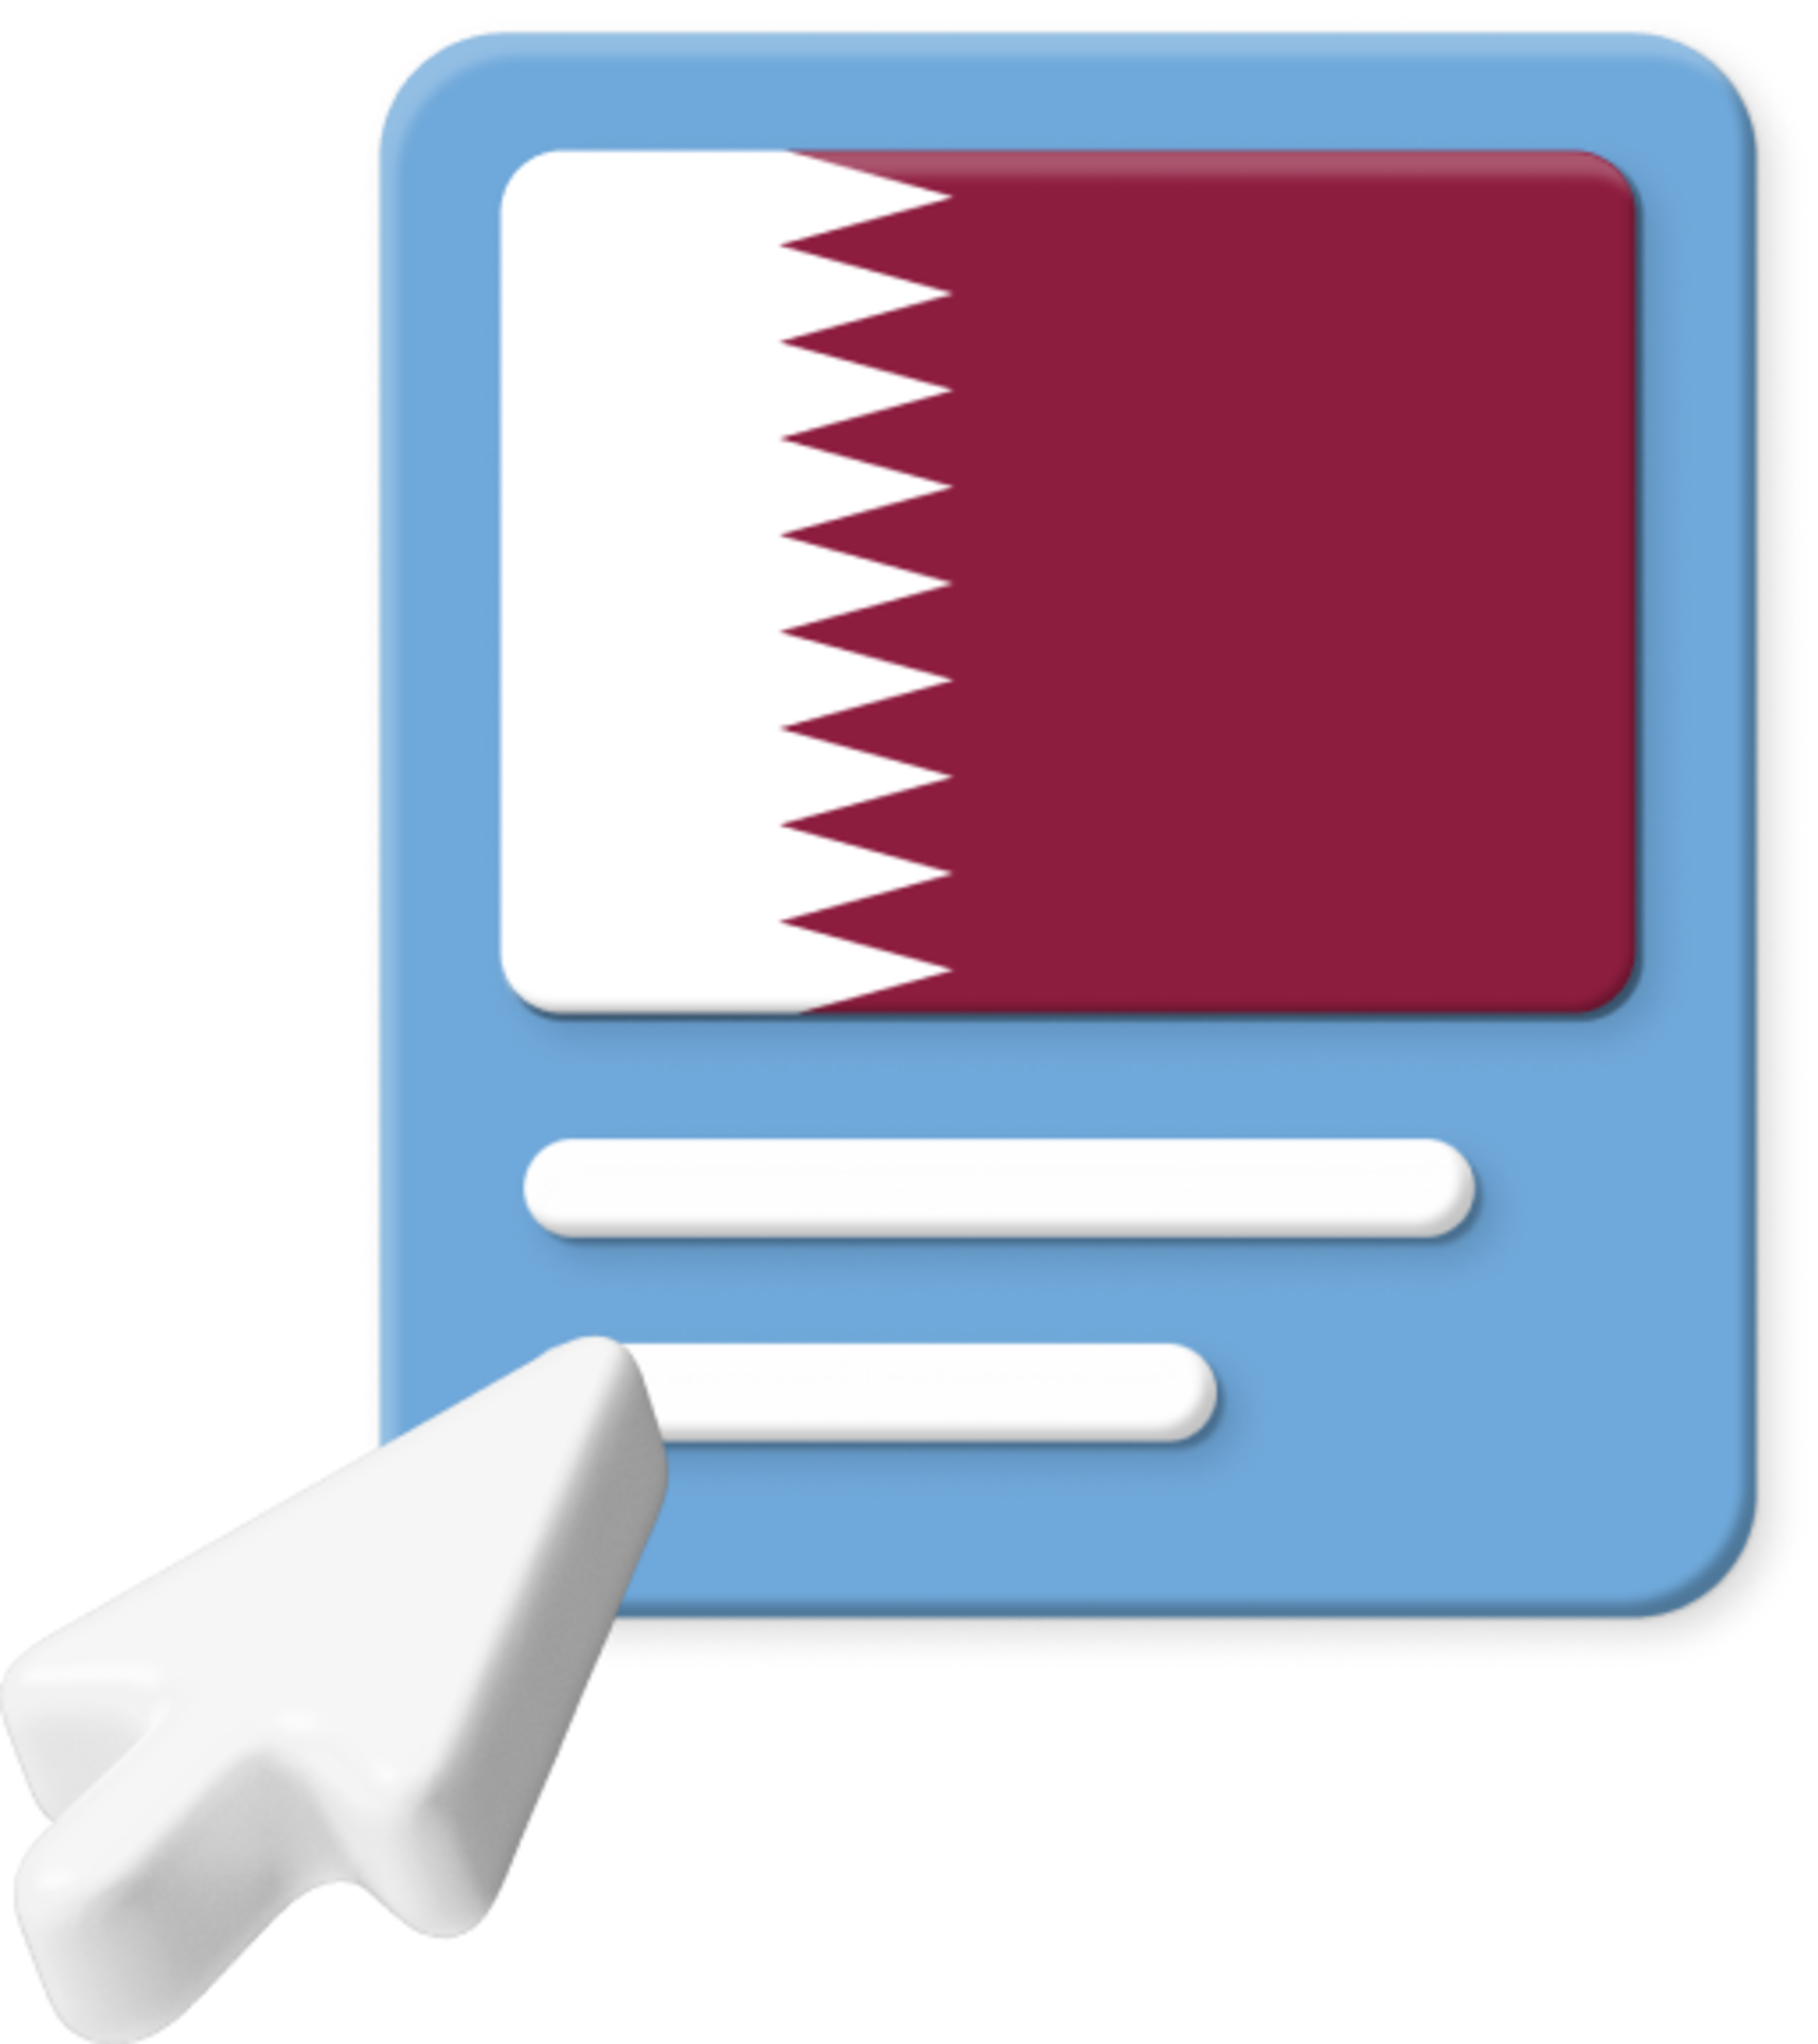 Qatari flag with pointer